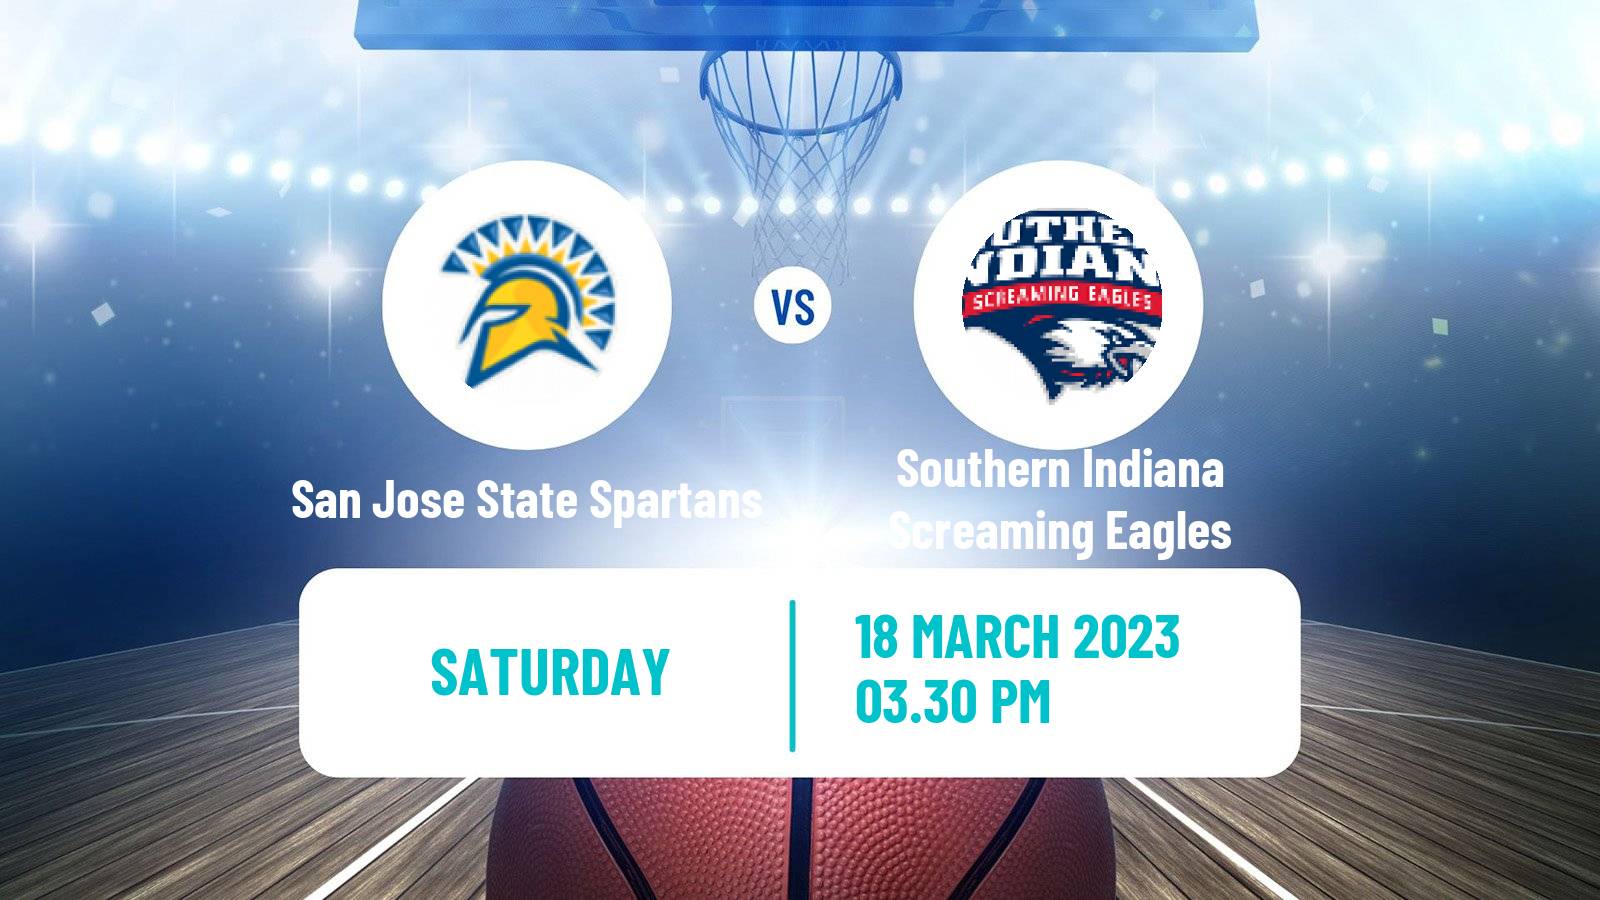 Basketball CBI San Jose State Spartans - Southern Indiana Screaming Eagles